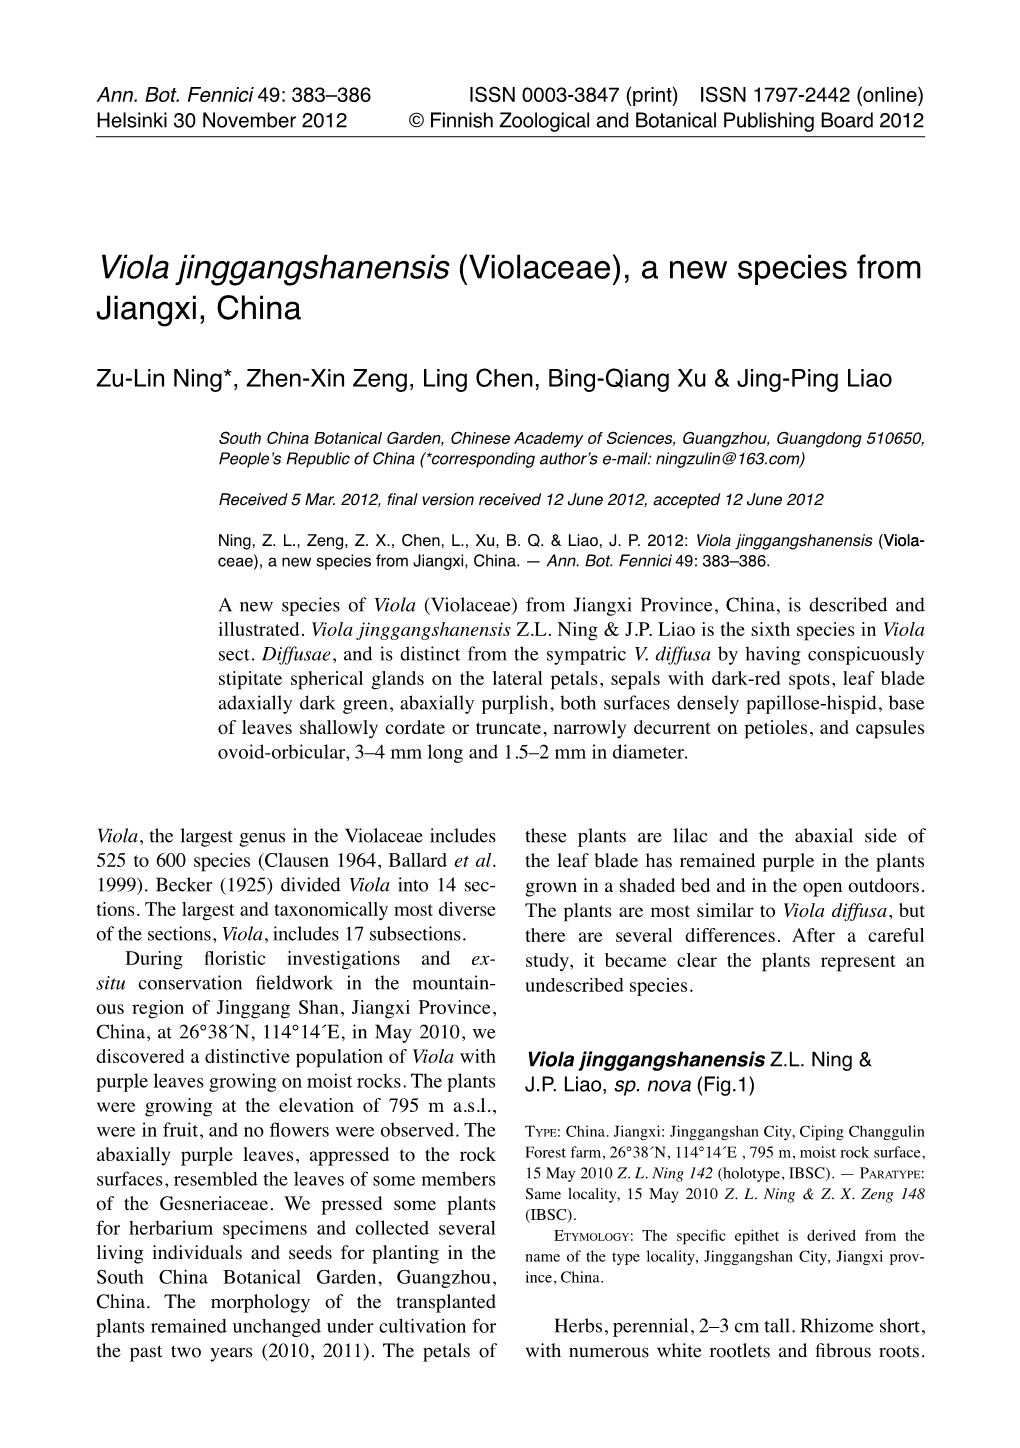 Viola Jinggangshanensis (Violaceae), a New Species from Jiangxi, China